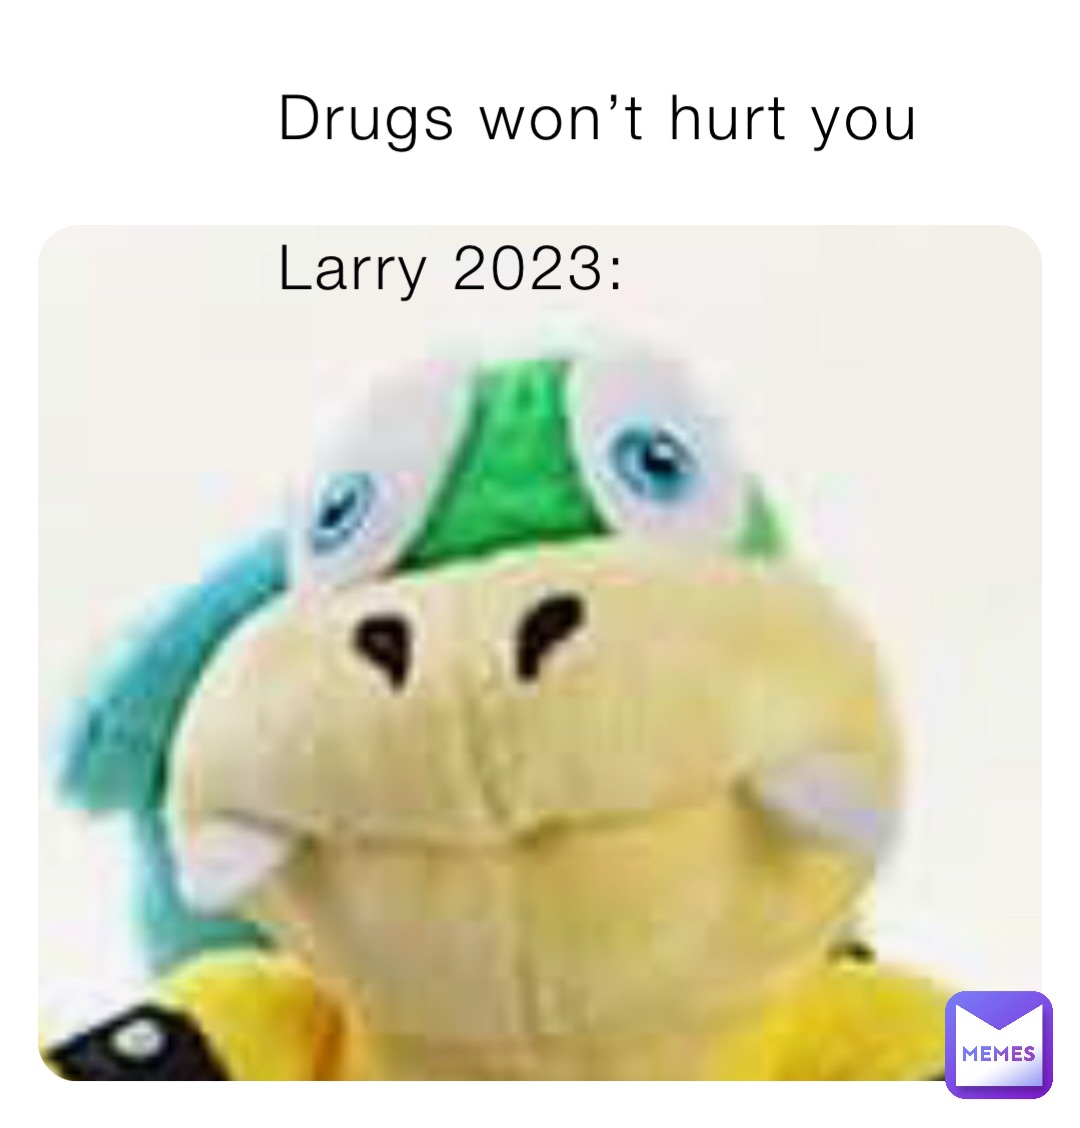 Drugs won’t hurt you

Larry 2023: